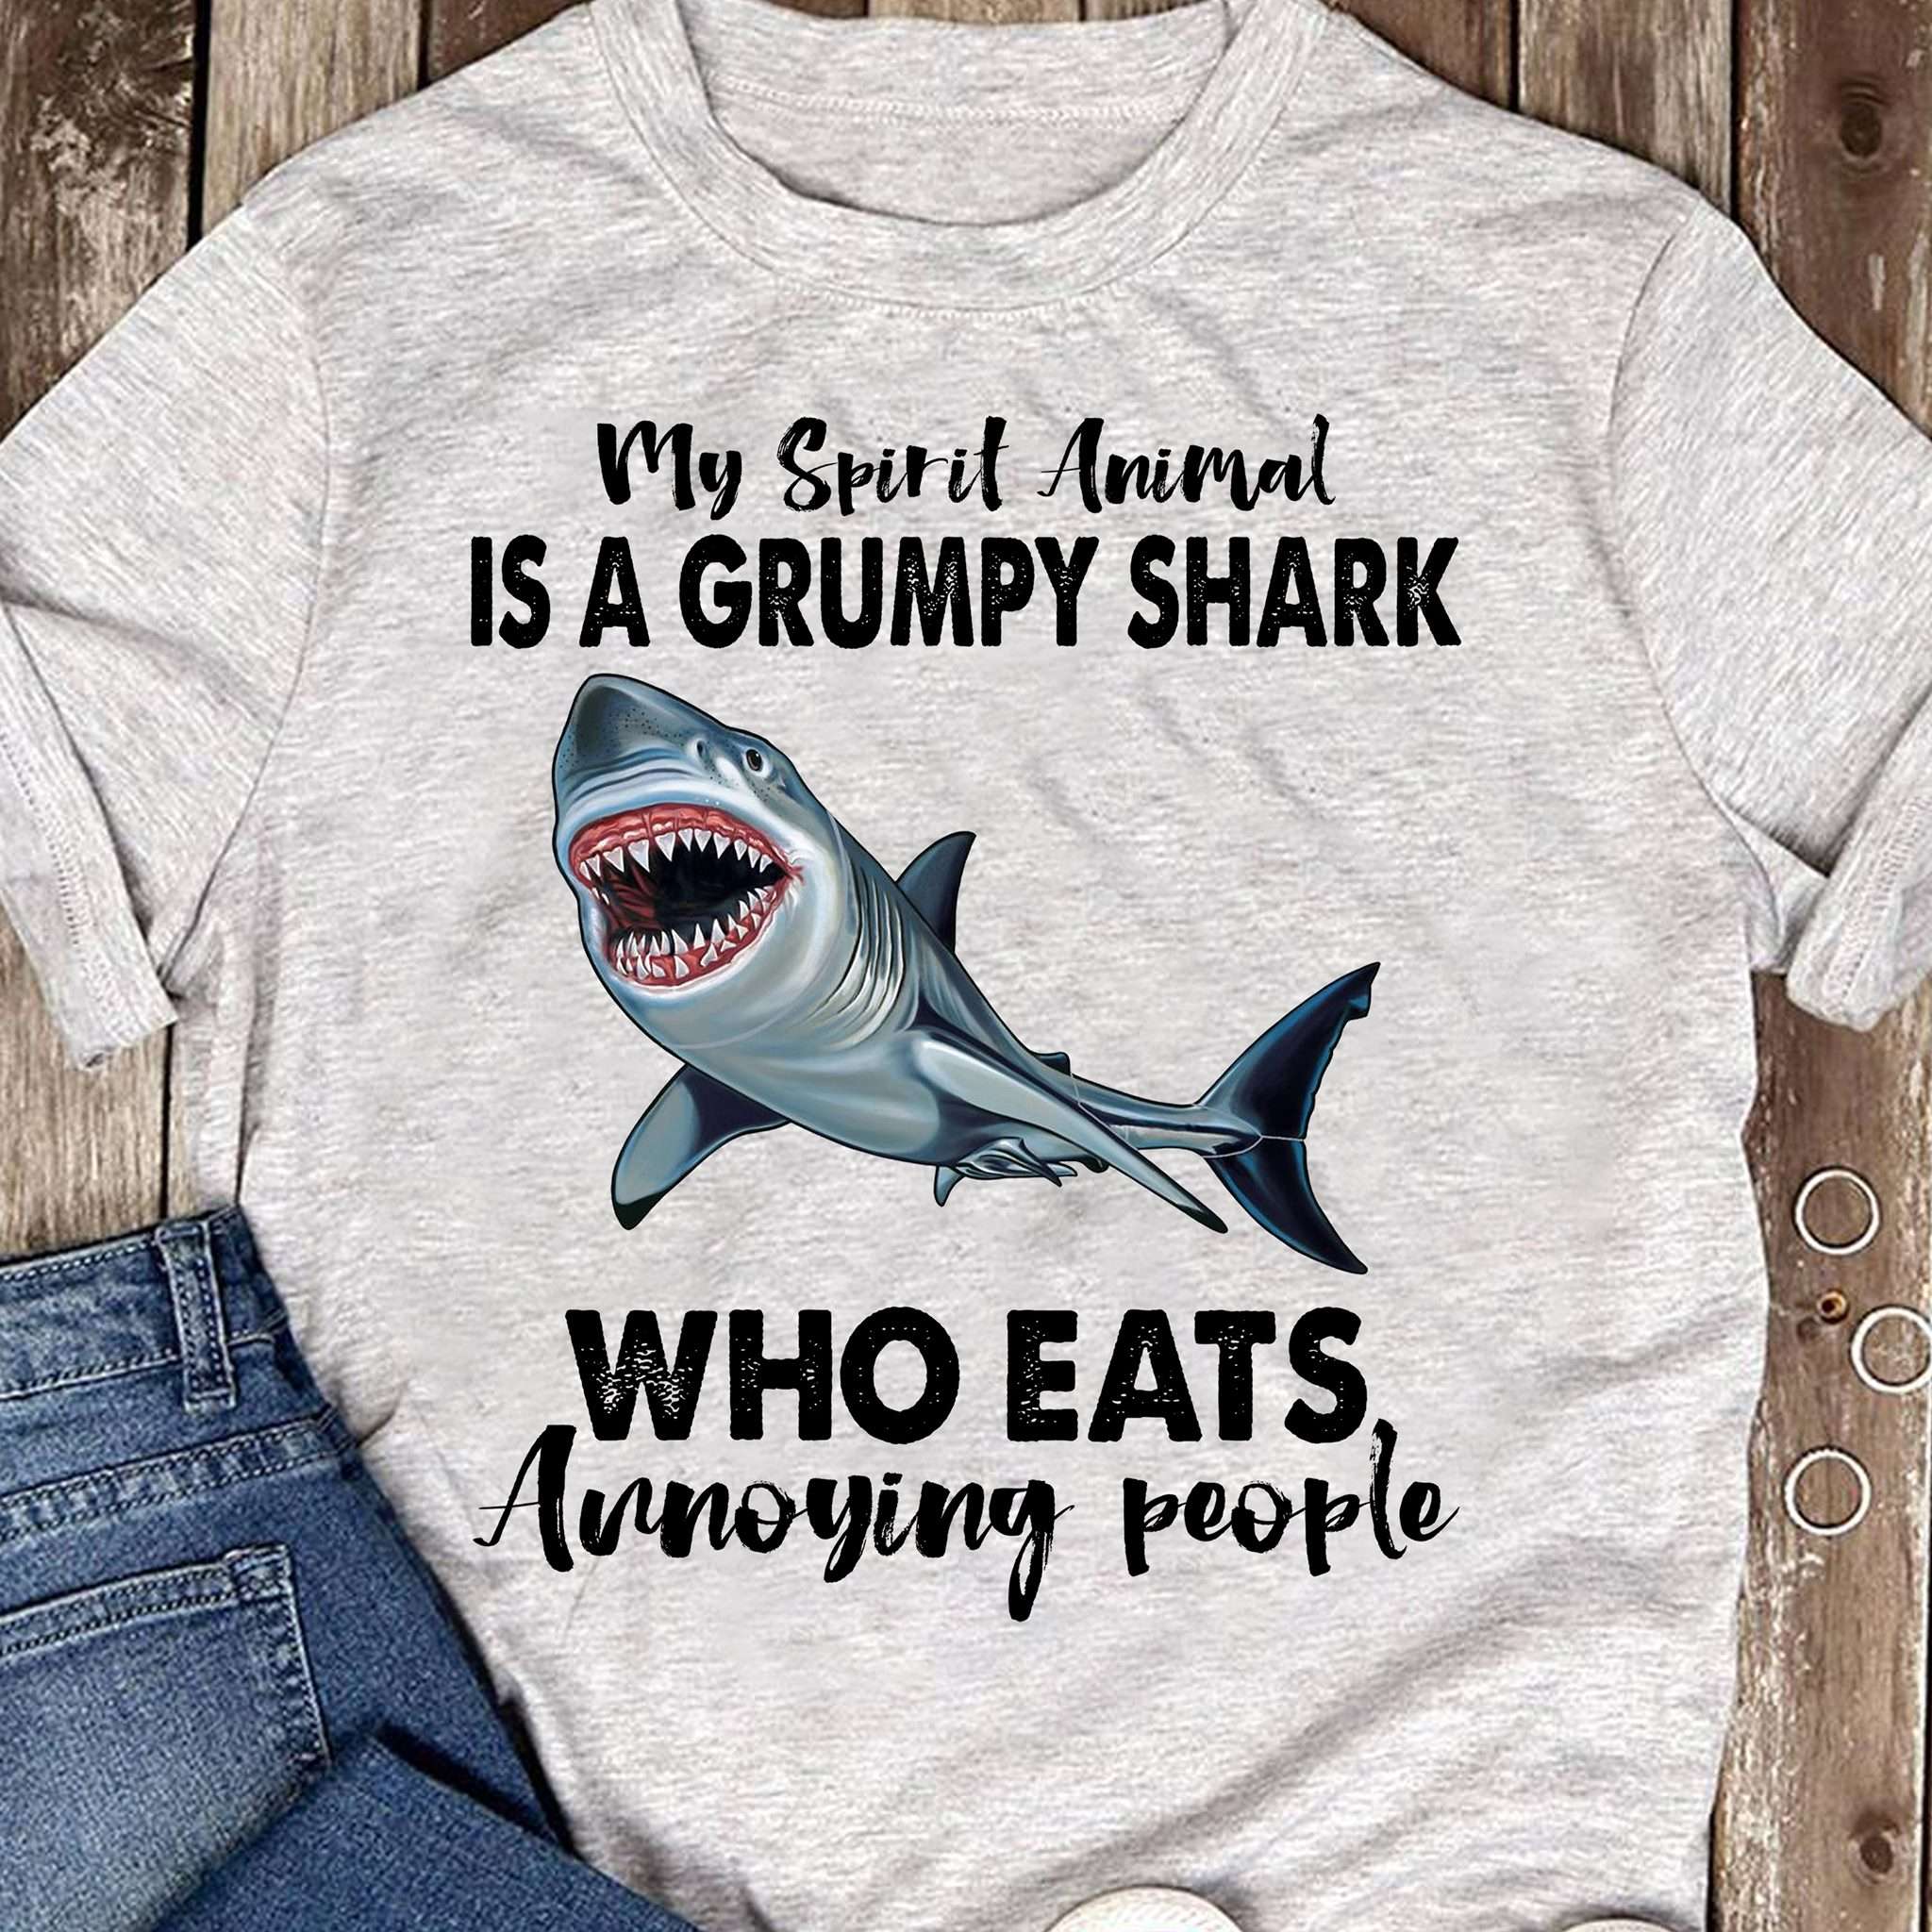 My spirit animal is a grumpy shark who eats annoying people - Grumpy Shark, Shark Lover